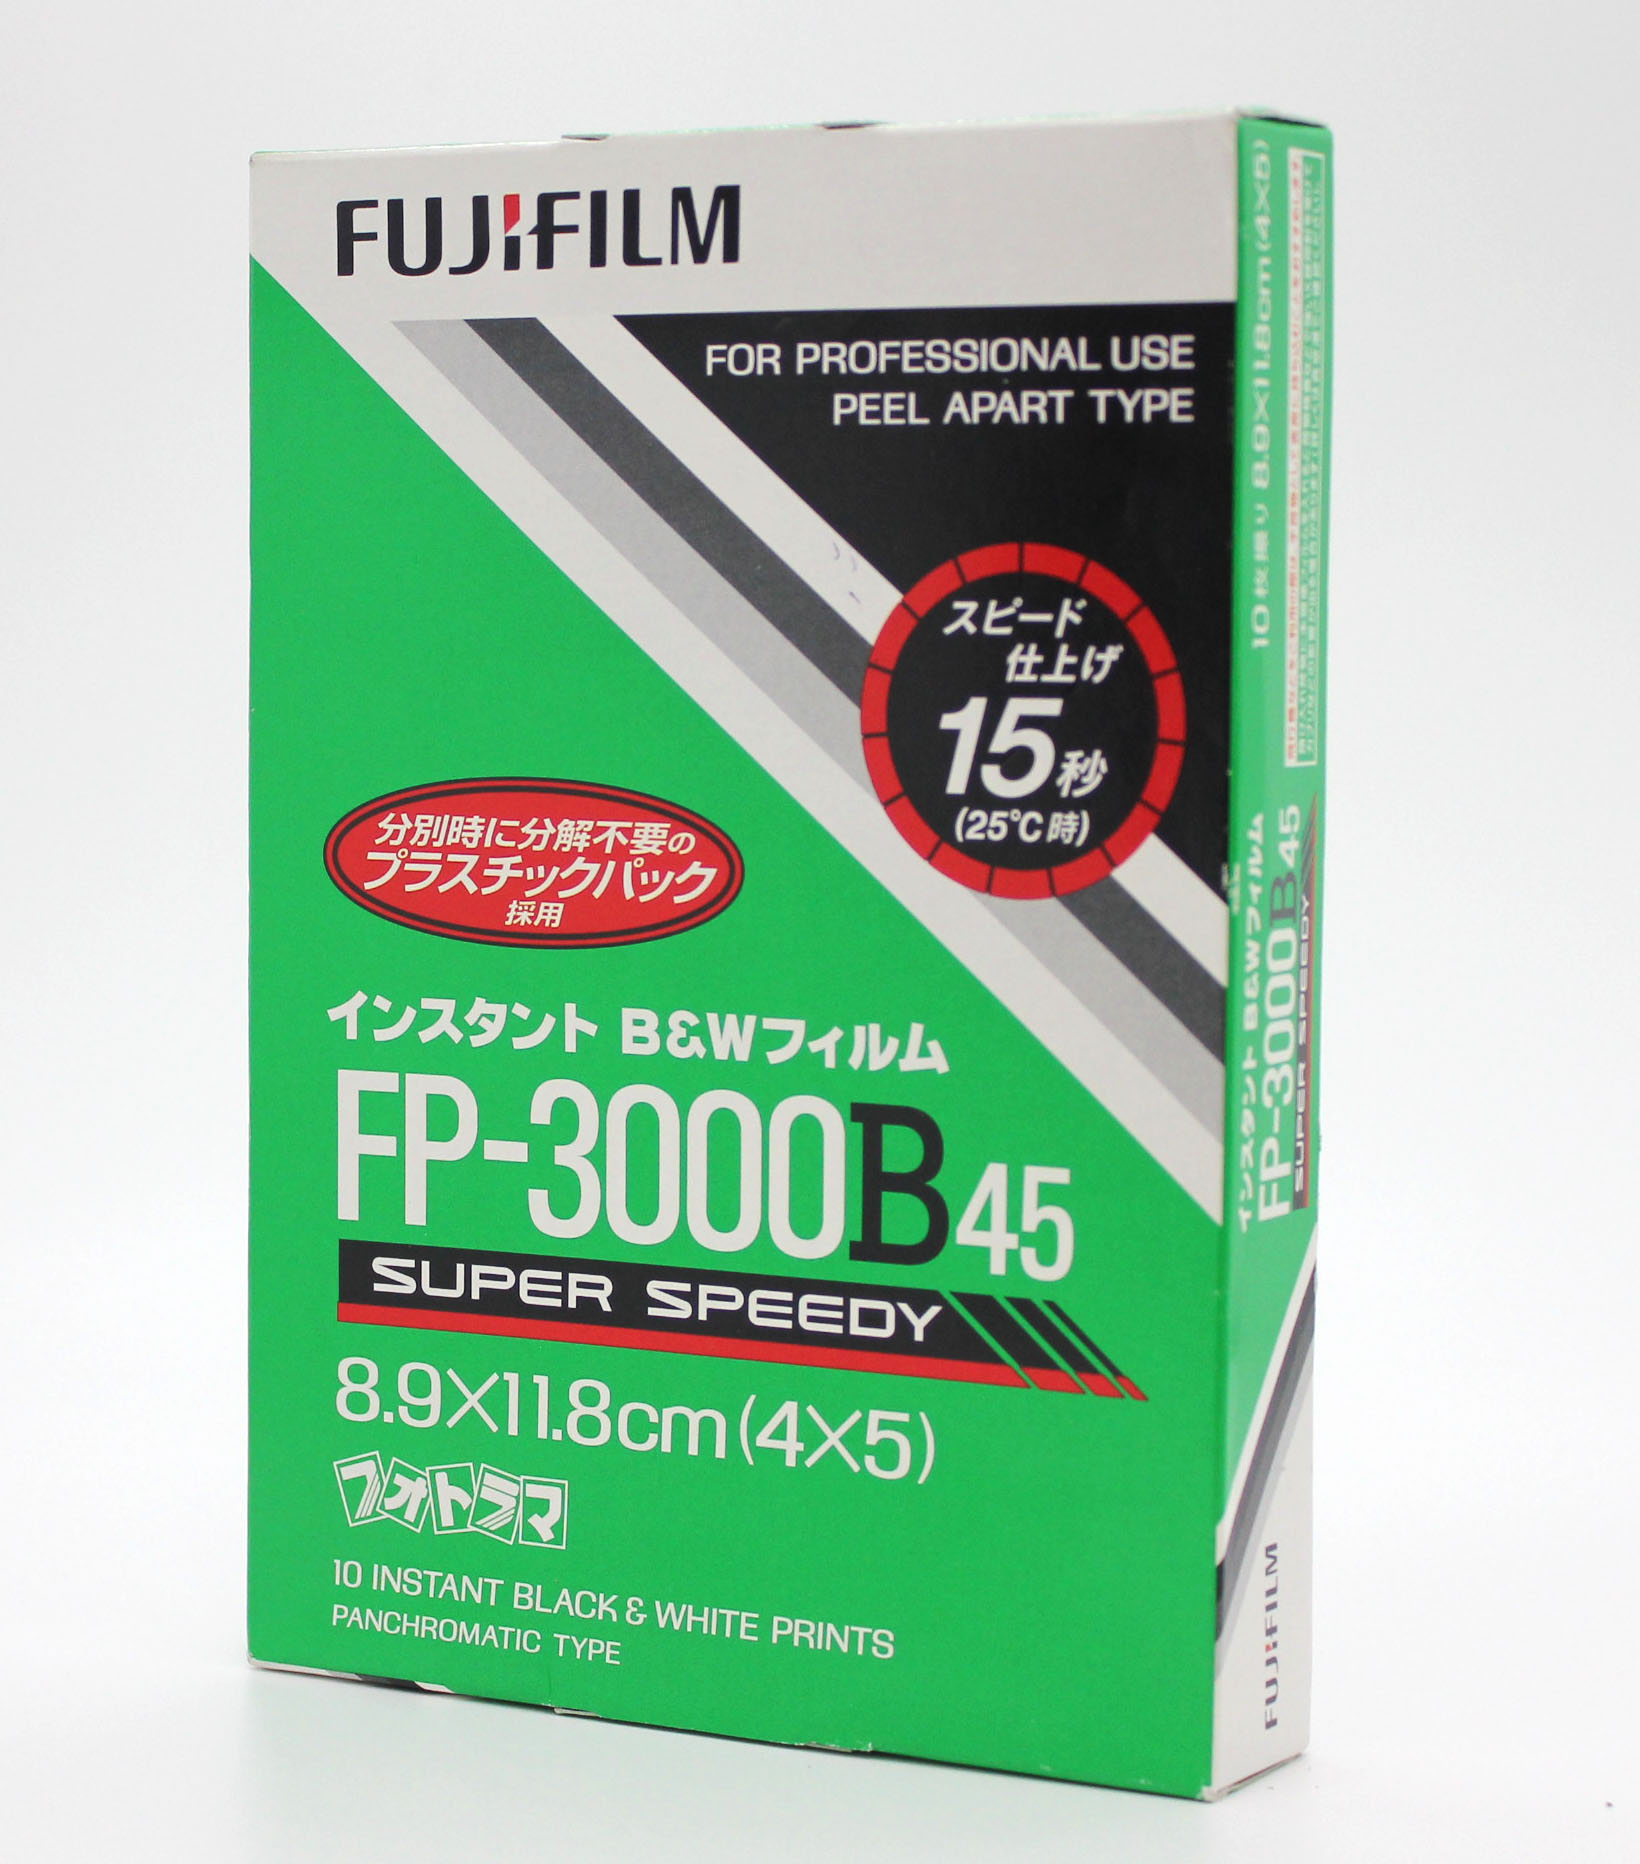 Japan Used Camera Shop | [New] Fuji Fujifilm FP-3000B45 4x5 8.9x11.8cm Instant Black & White Film (EXP 10/2010) from Japan